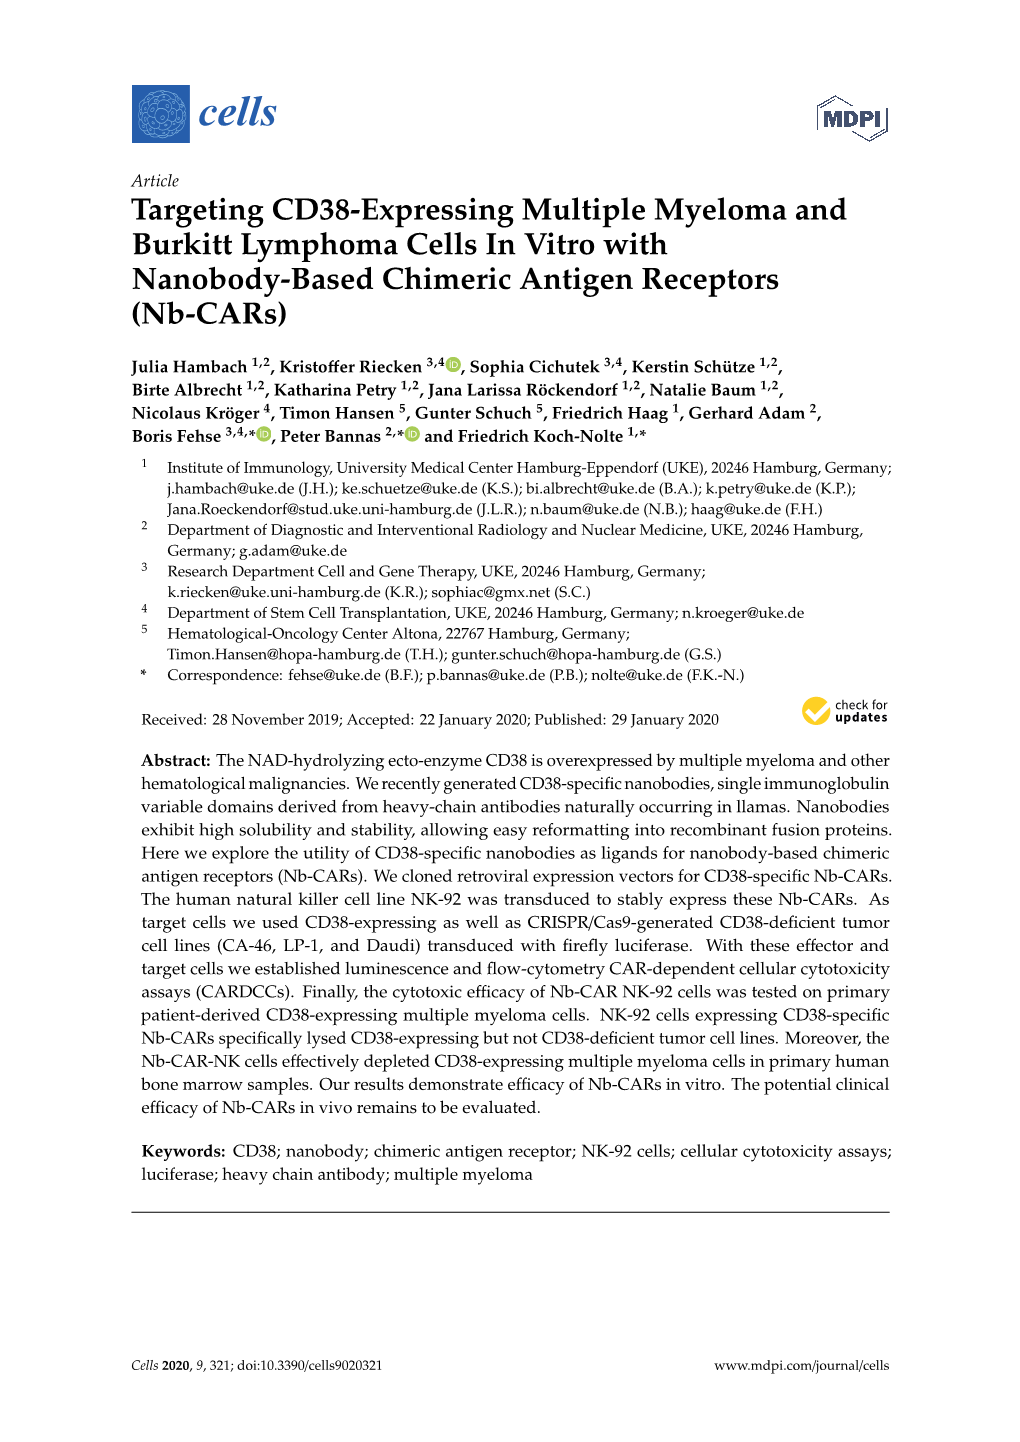 Targeting CD38-Expressing Multiple Myeloma and Burkitt Lymphoma Cells in Vitro with Nanobody-Based Chimeric Antigen Receptors (Nb-Cars)